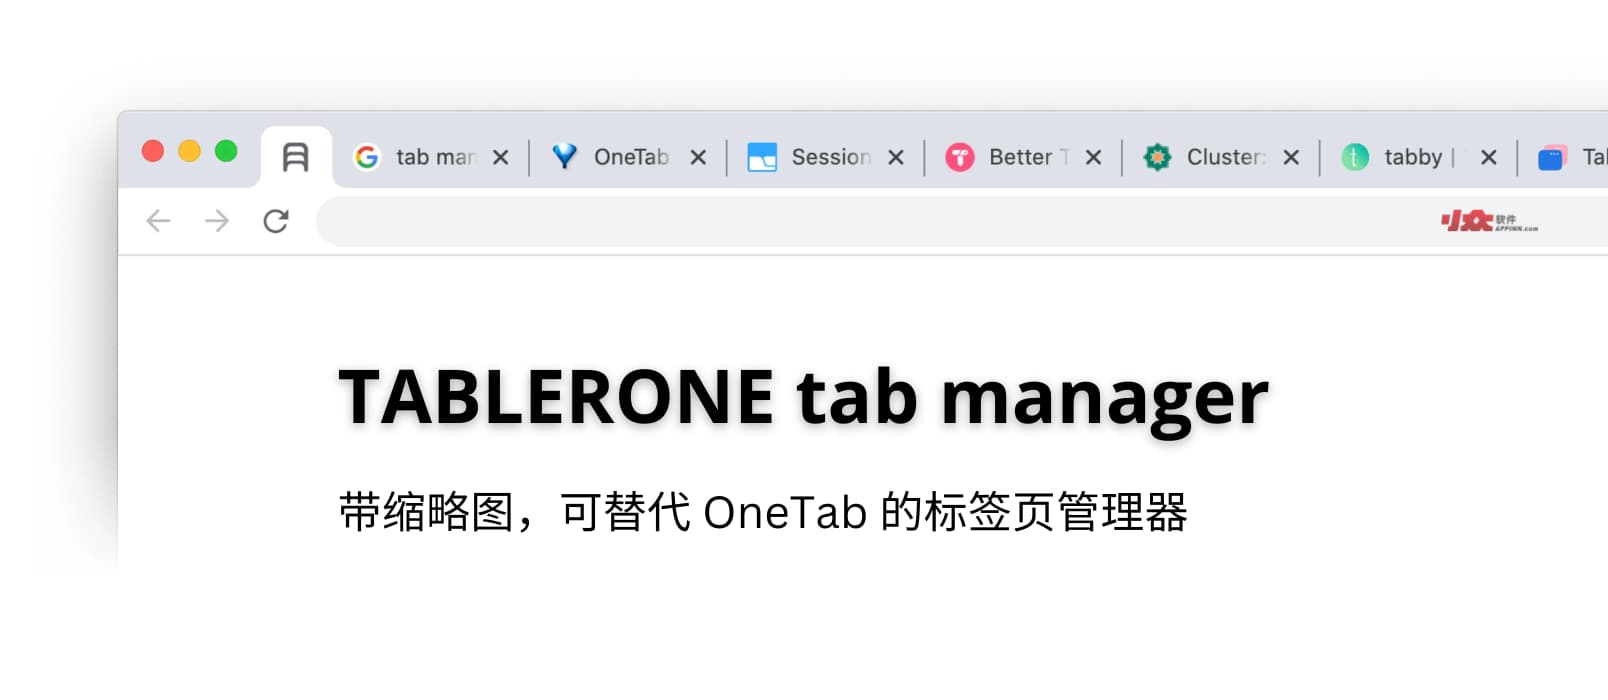 TABLERONE tab manager - 带缩略图，可替代 OneTab 的标签页管理器[Chrome]